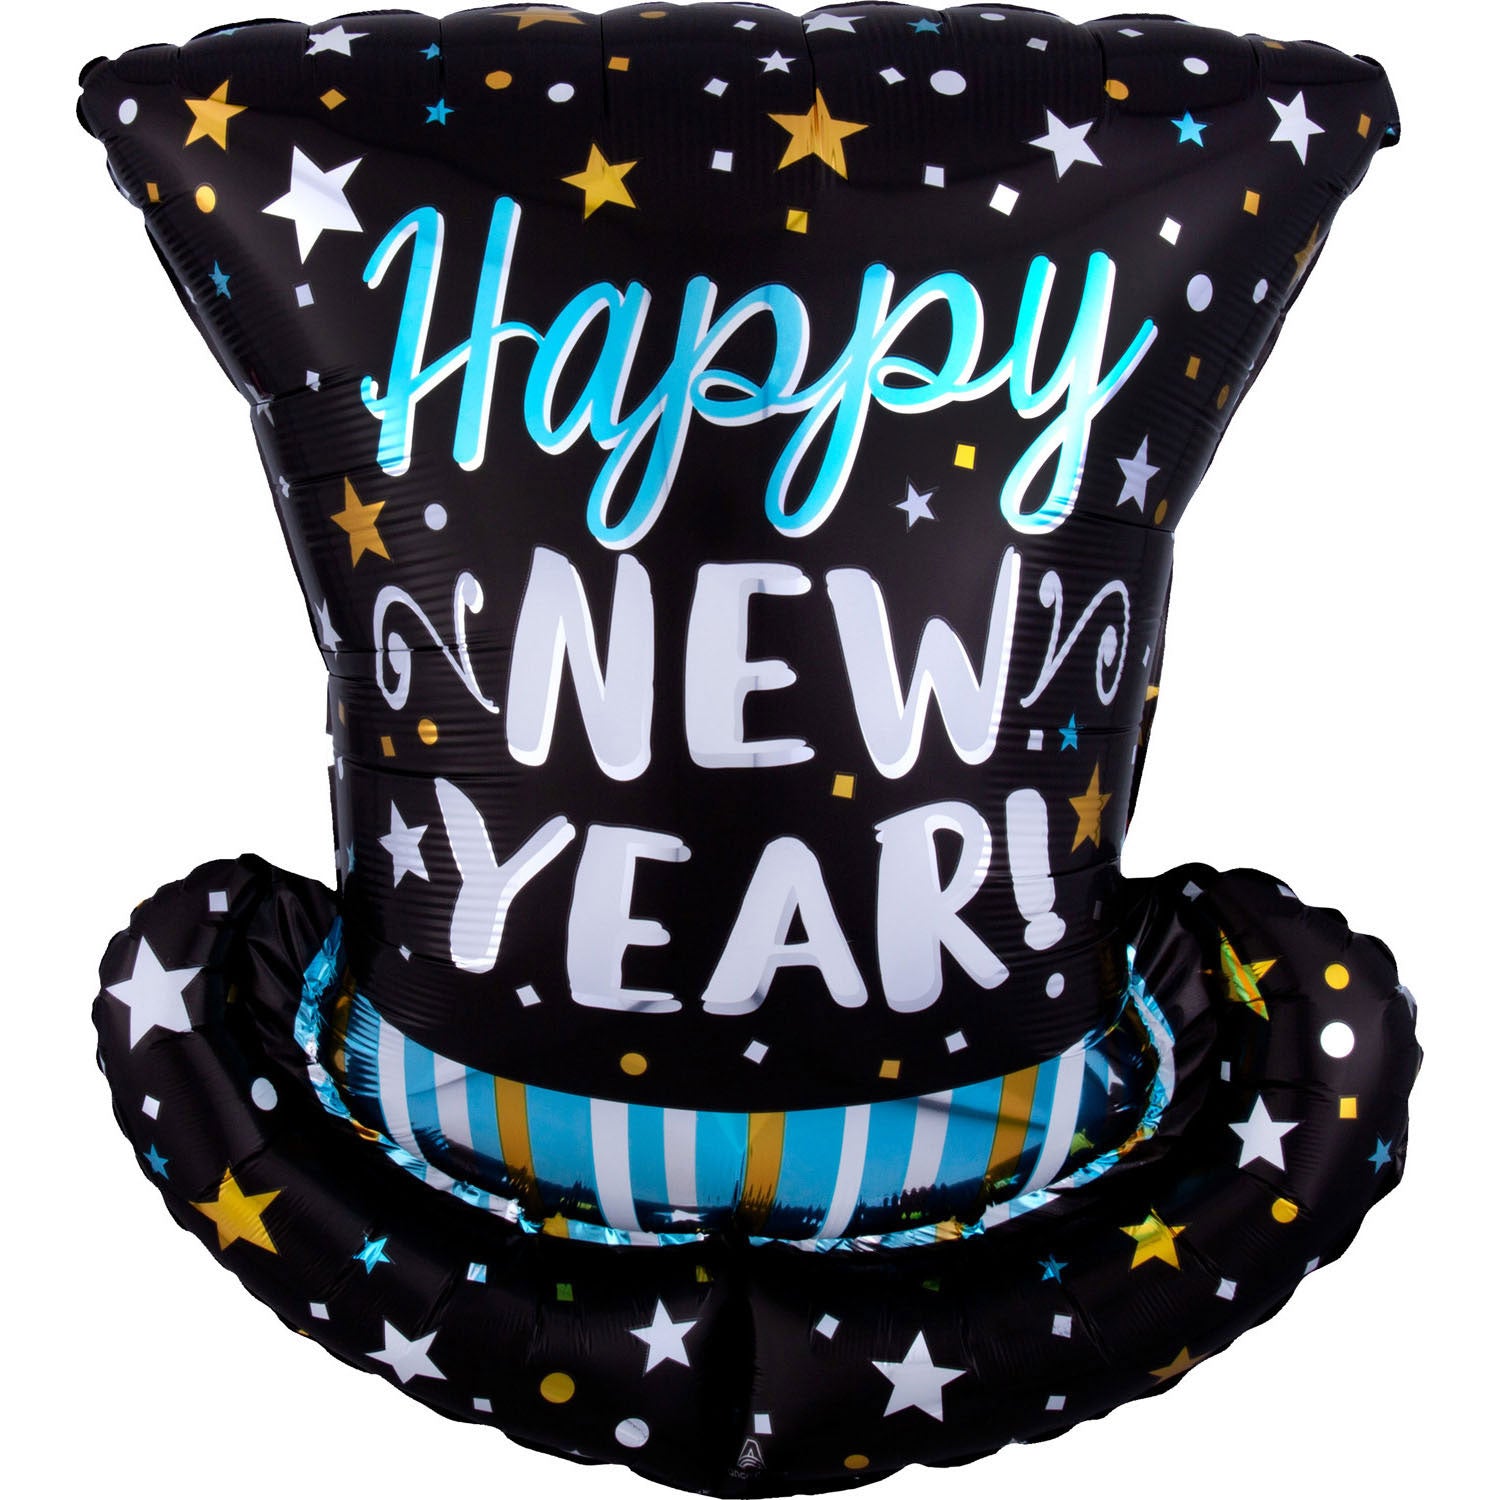 Giant balloon hat Happy New Year